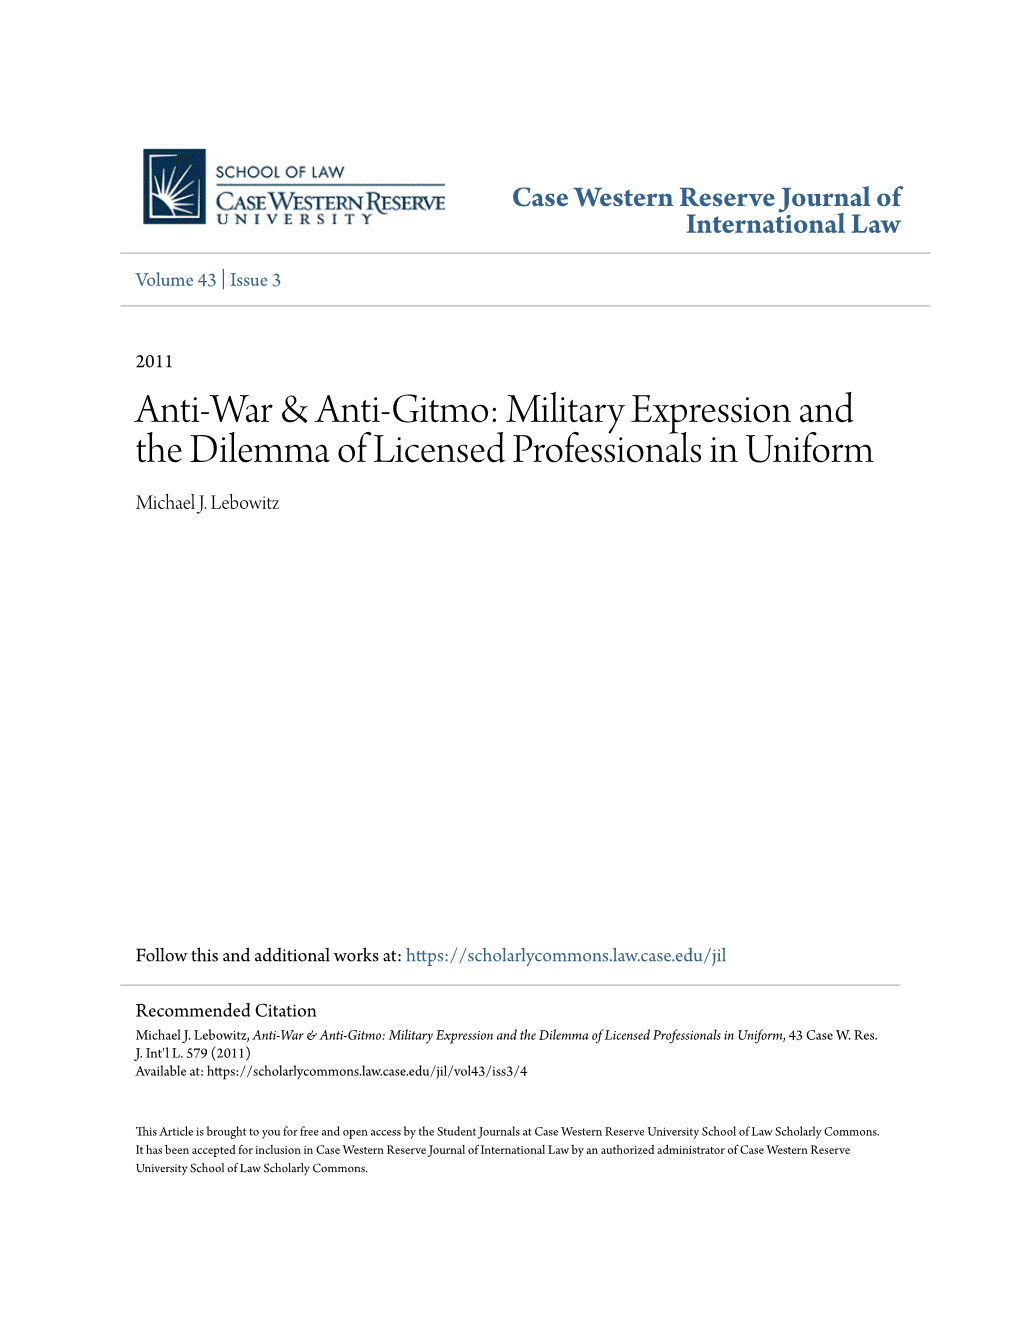 Anti-War & Anti-Gitmo: Military Expression and the Dilemma Of